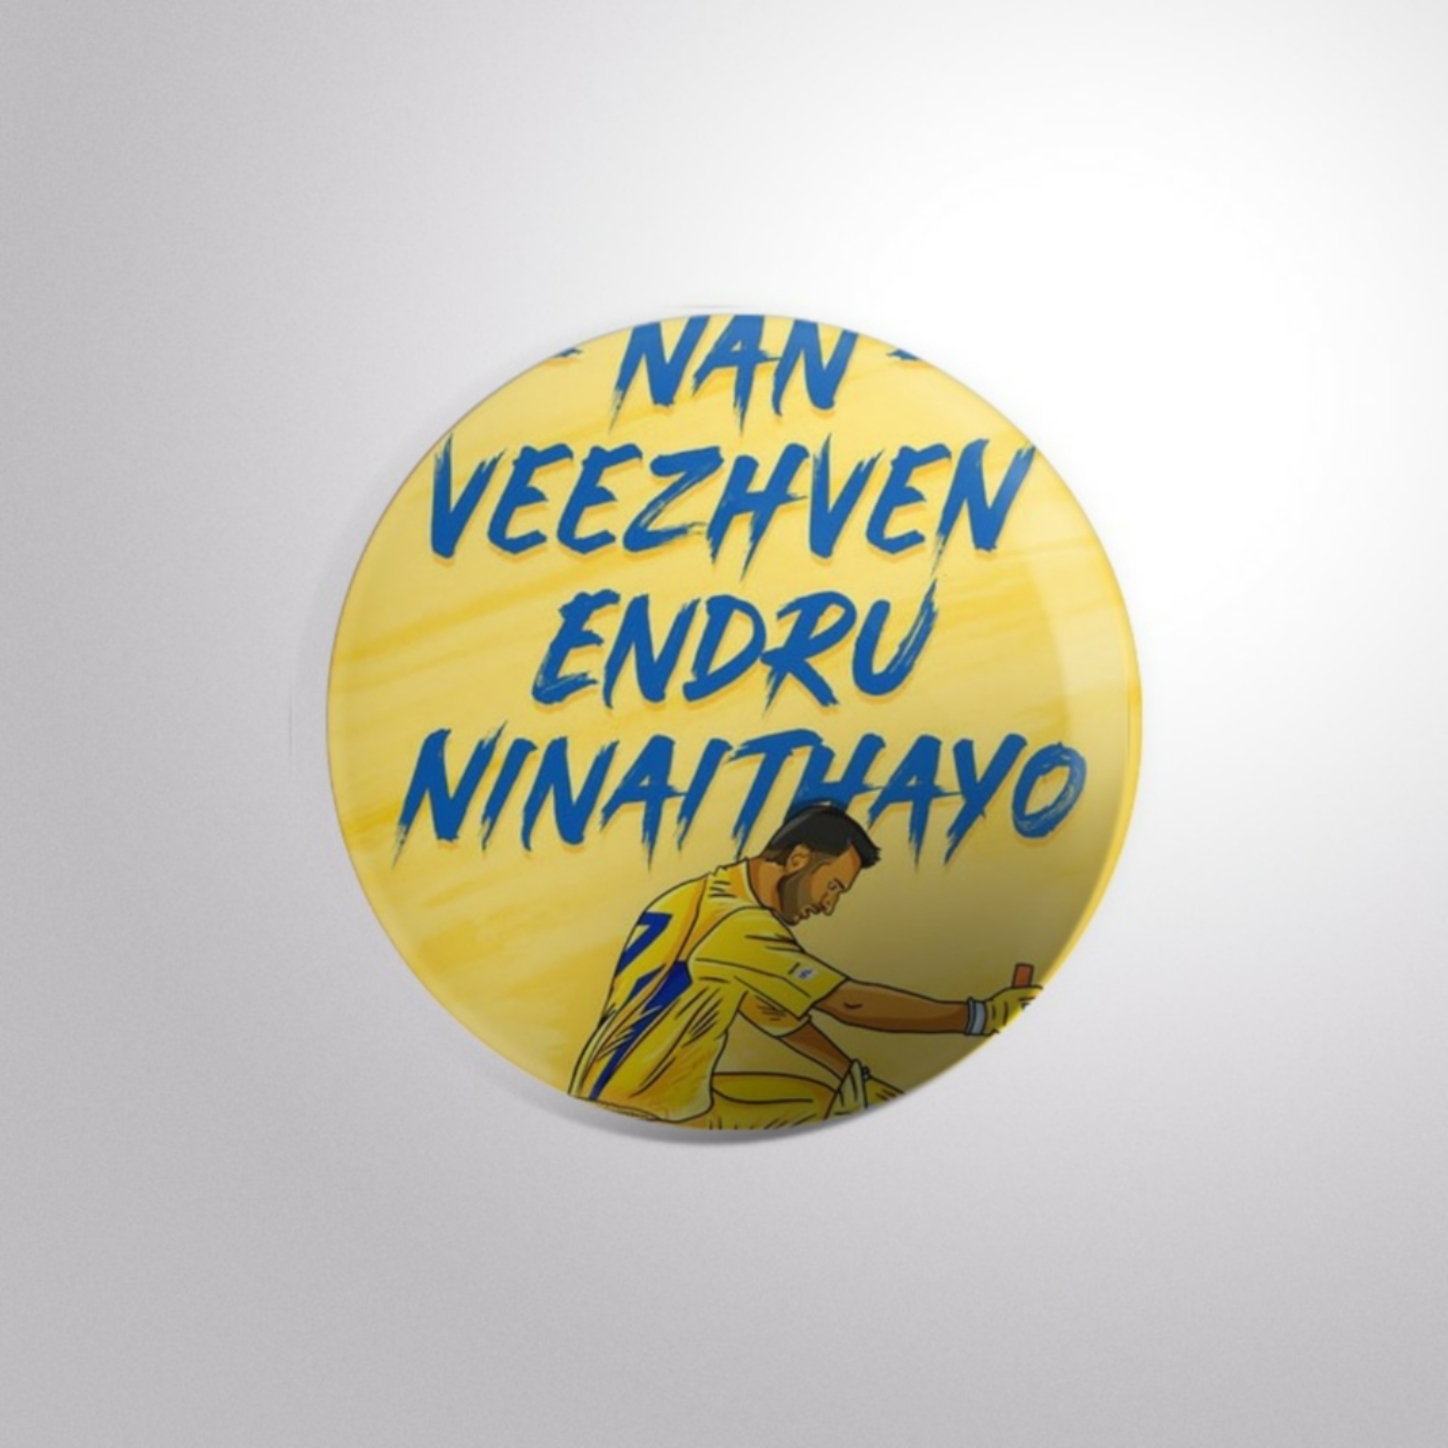 Naan Vizhven Endru Ninathaiyo Badge